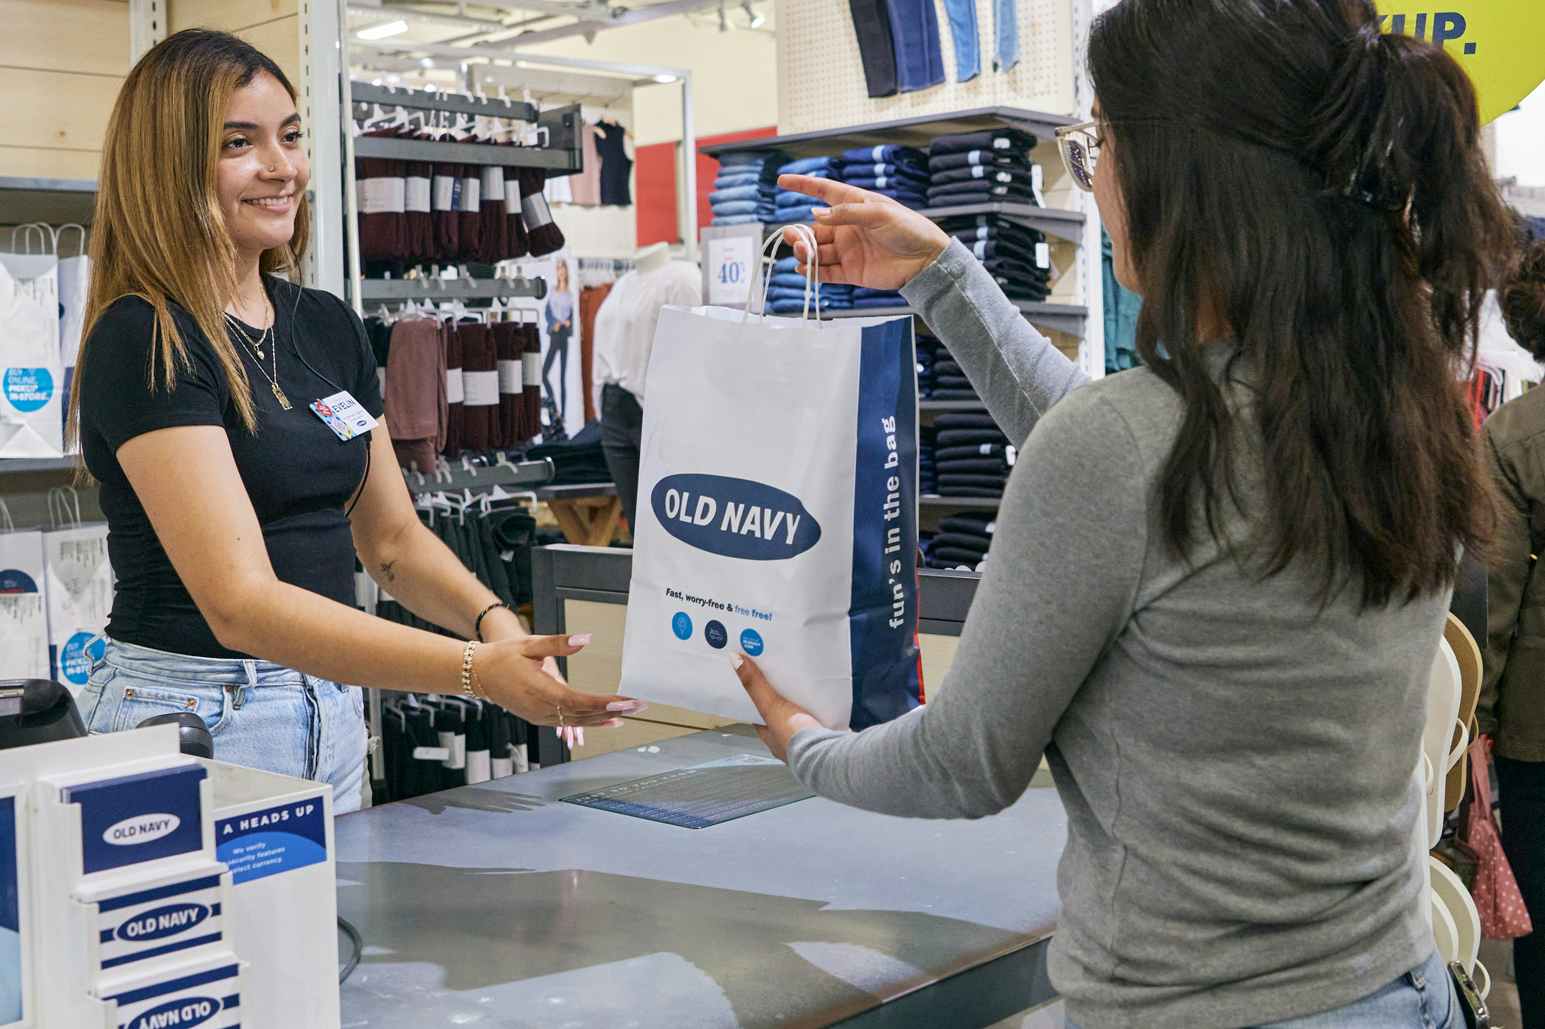 old navy cashier handing shopper bag at checkout